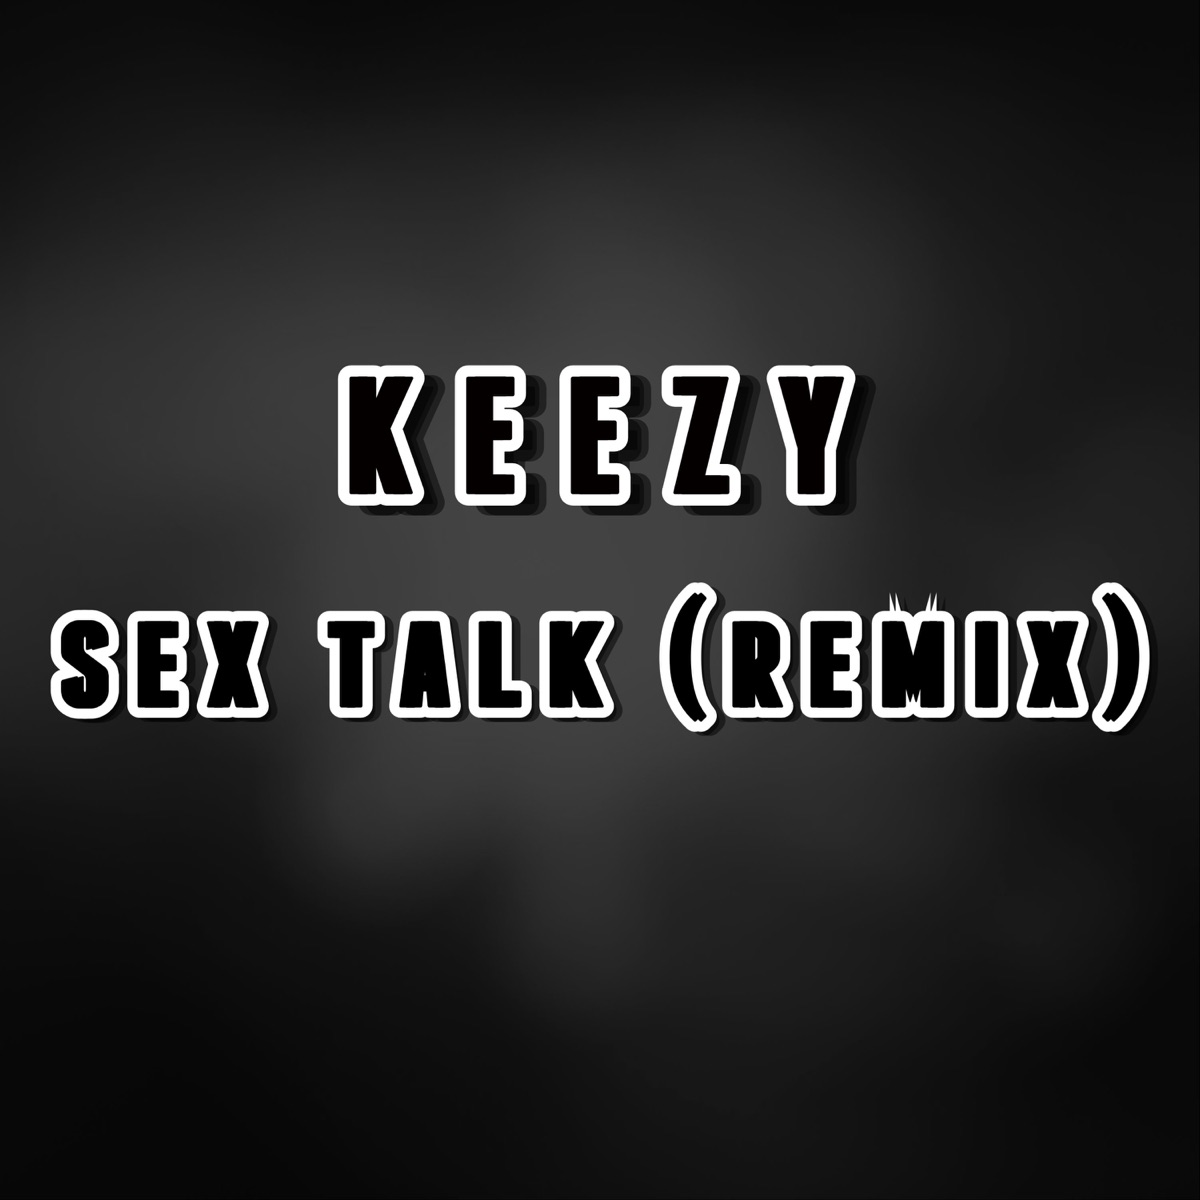 Sex Talk (Remix) - Single - Album by Keezy - Apple Music